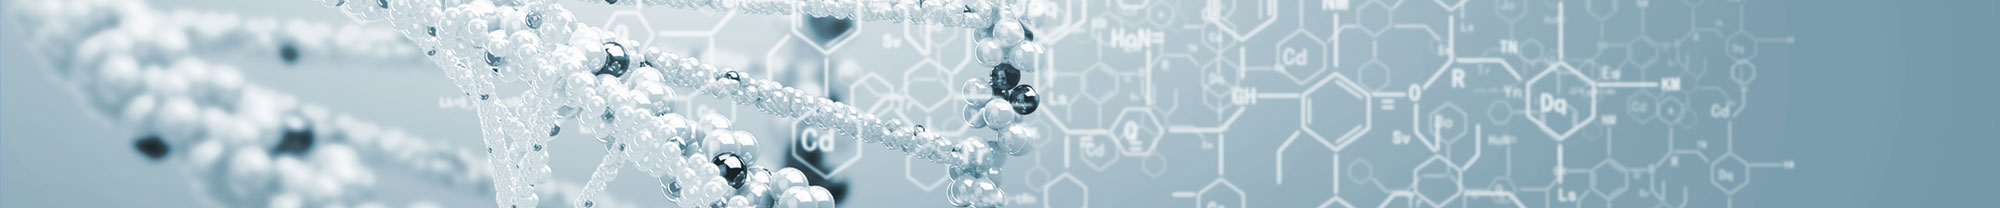 Stylized Molecules